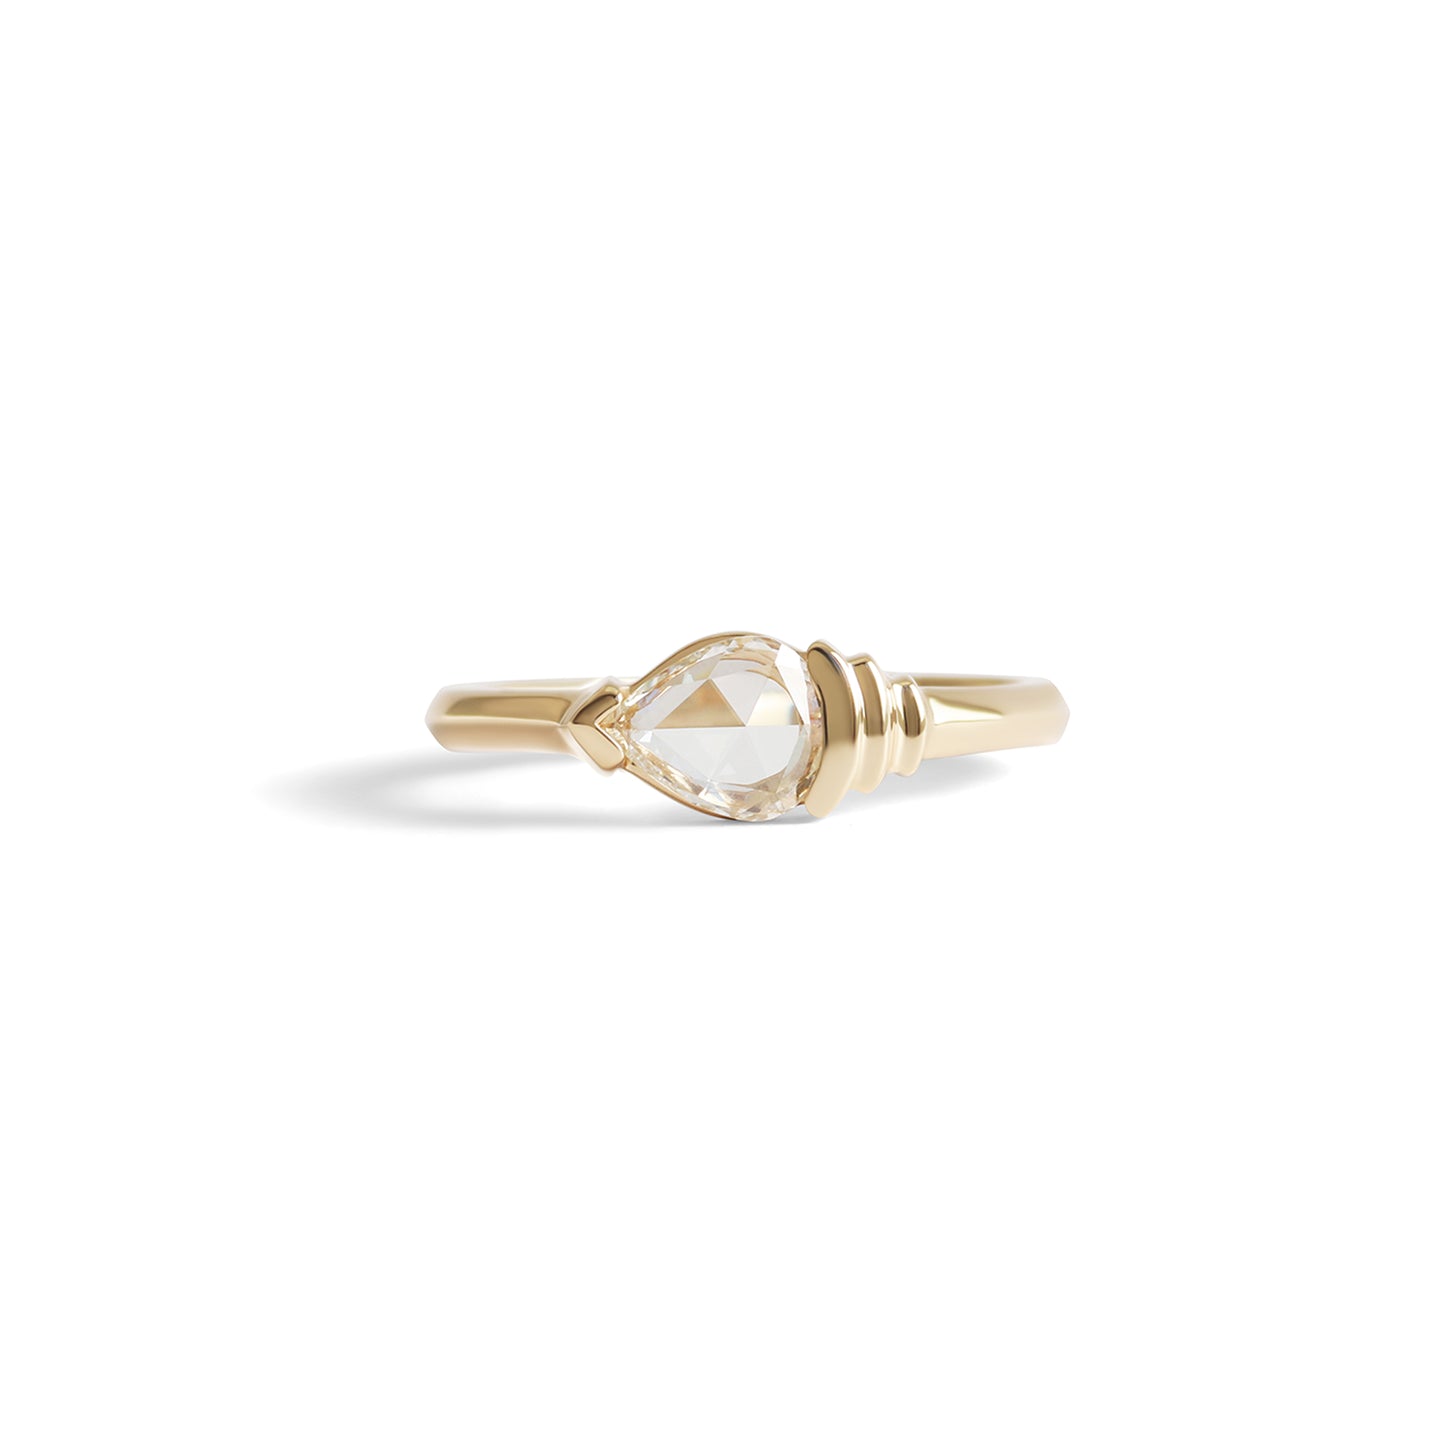 Sideways Step Ring / Pear Rose Cut Diamond 0.27ct - Goldpoint Studio - Greenpoint, Brooklyn - Fine Jewelry